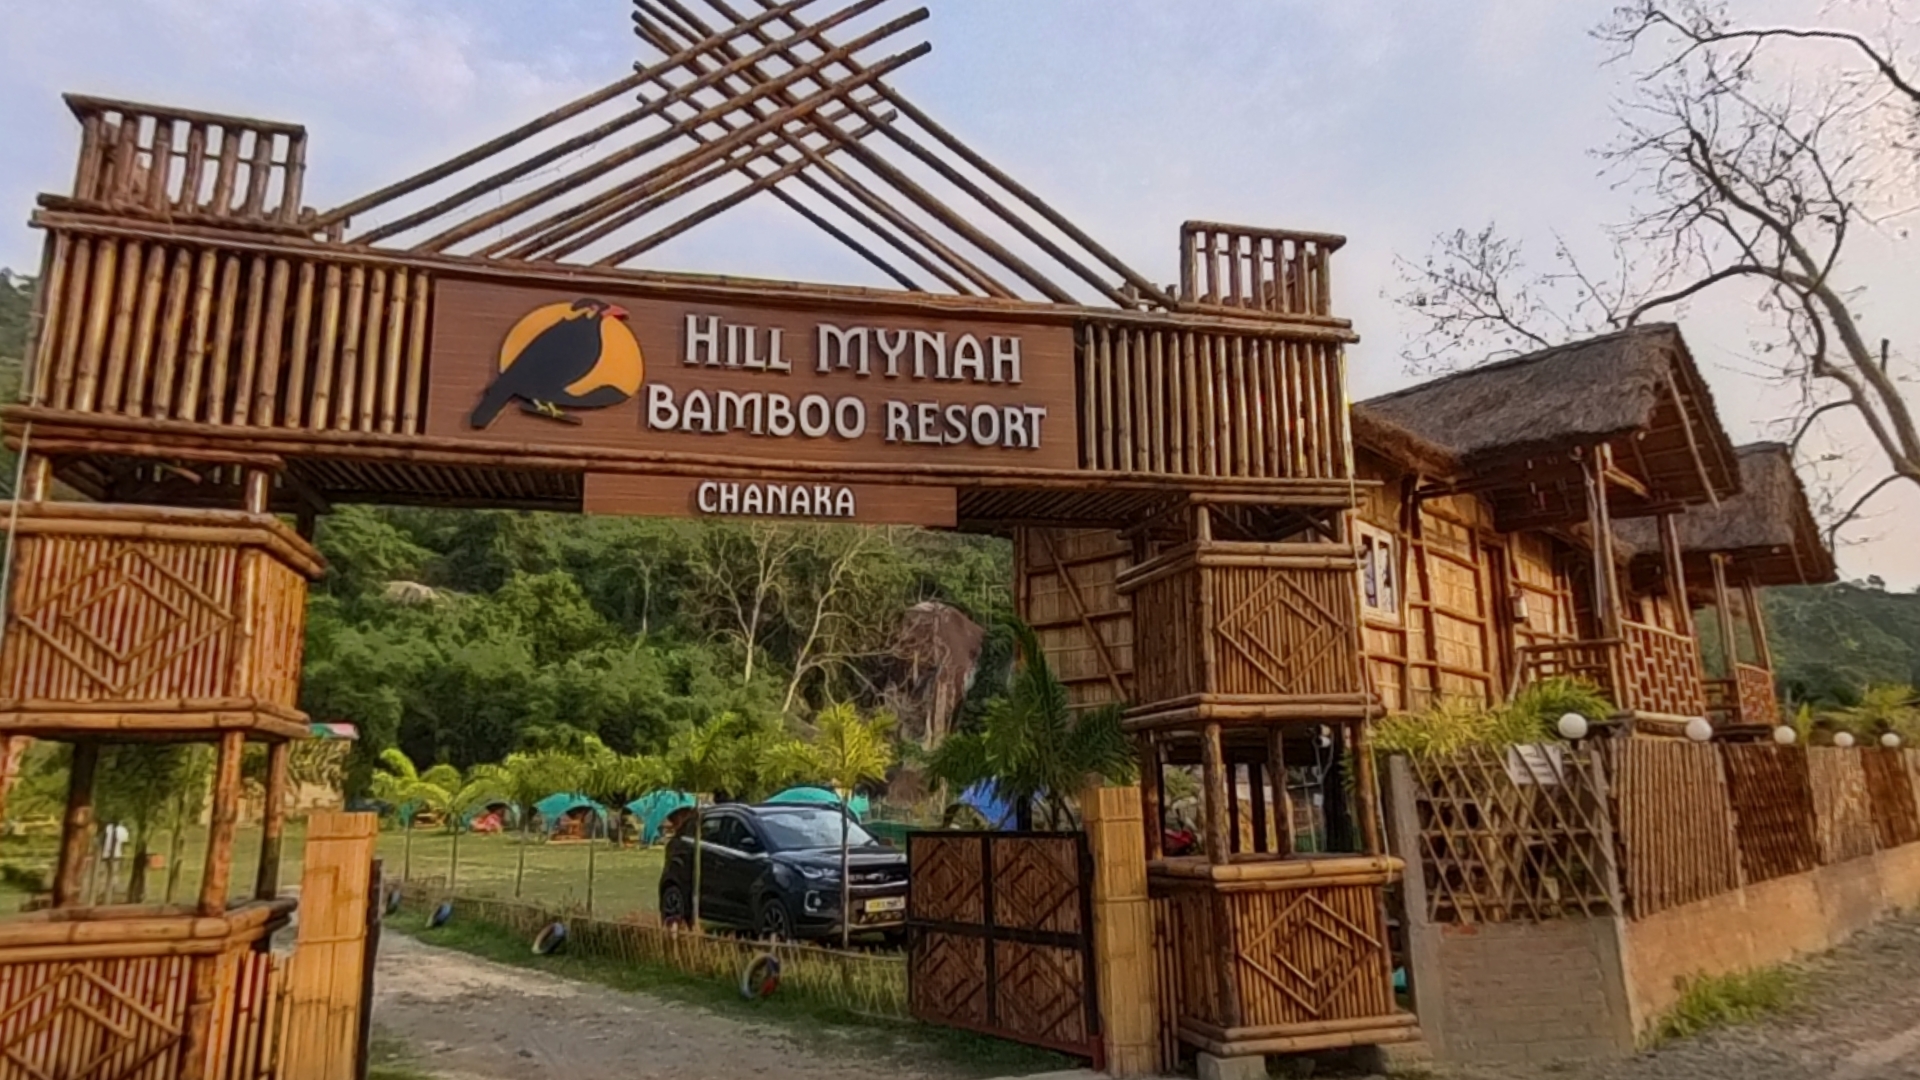 Hill mynah bamboo resort